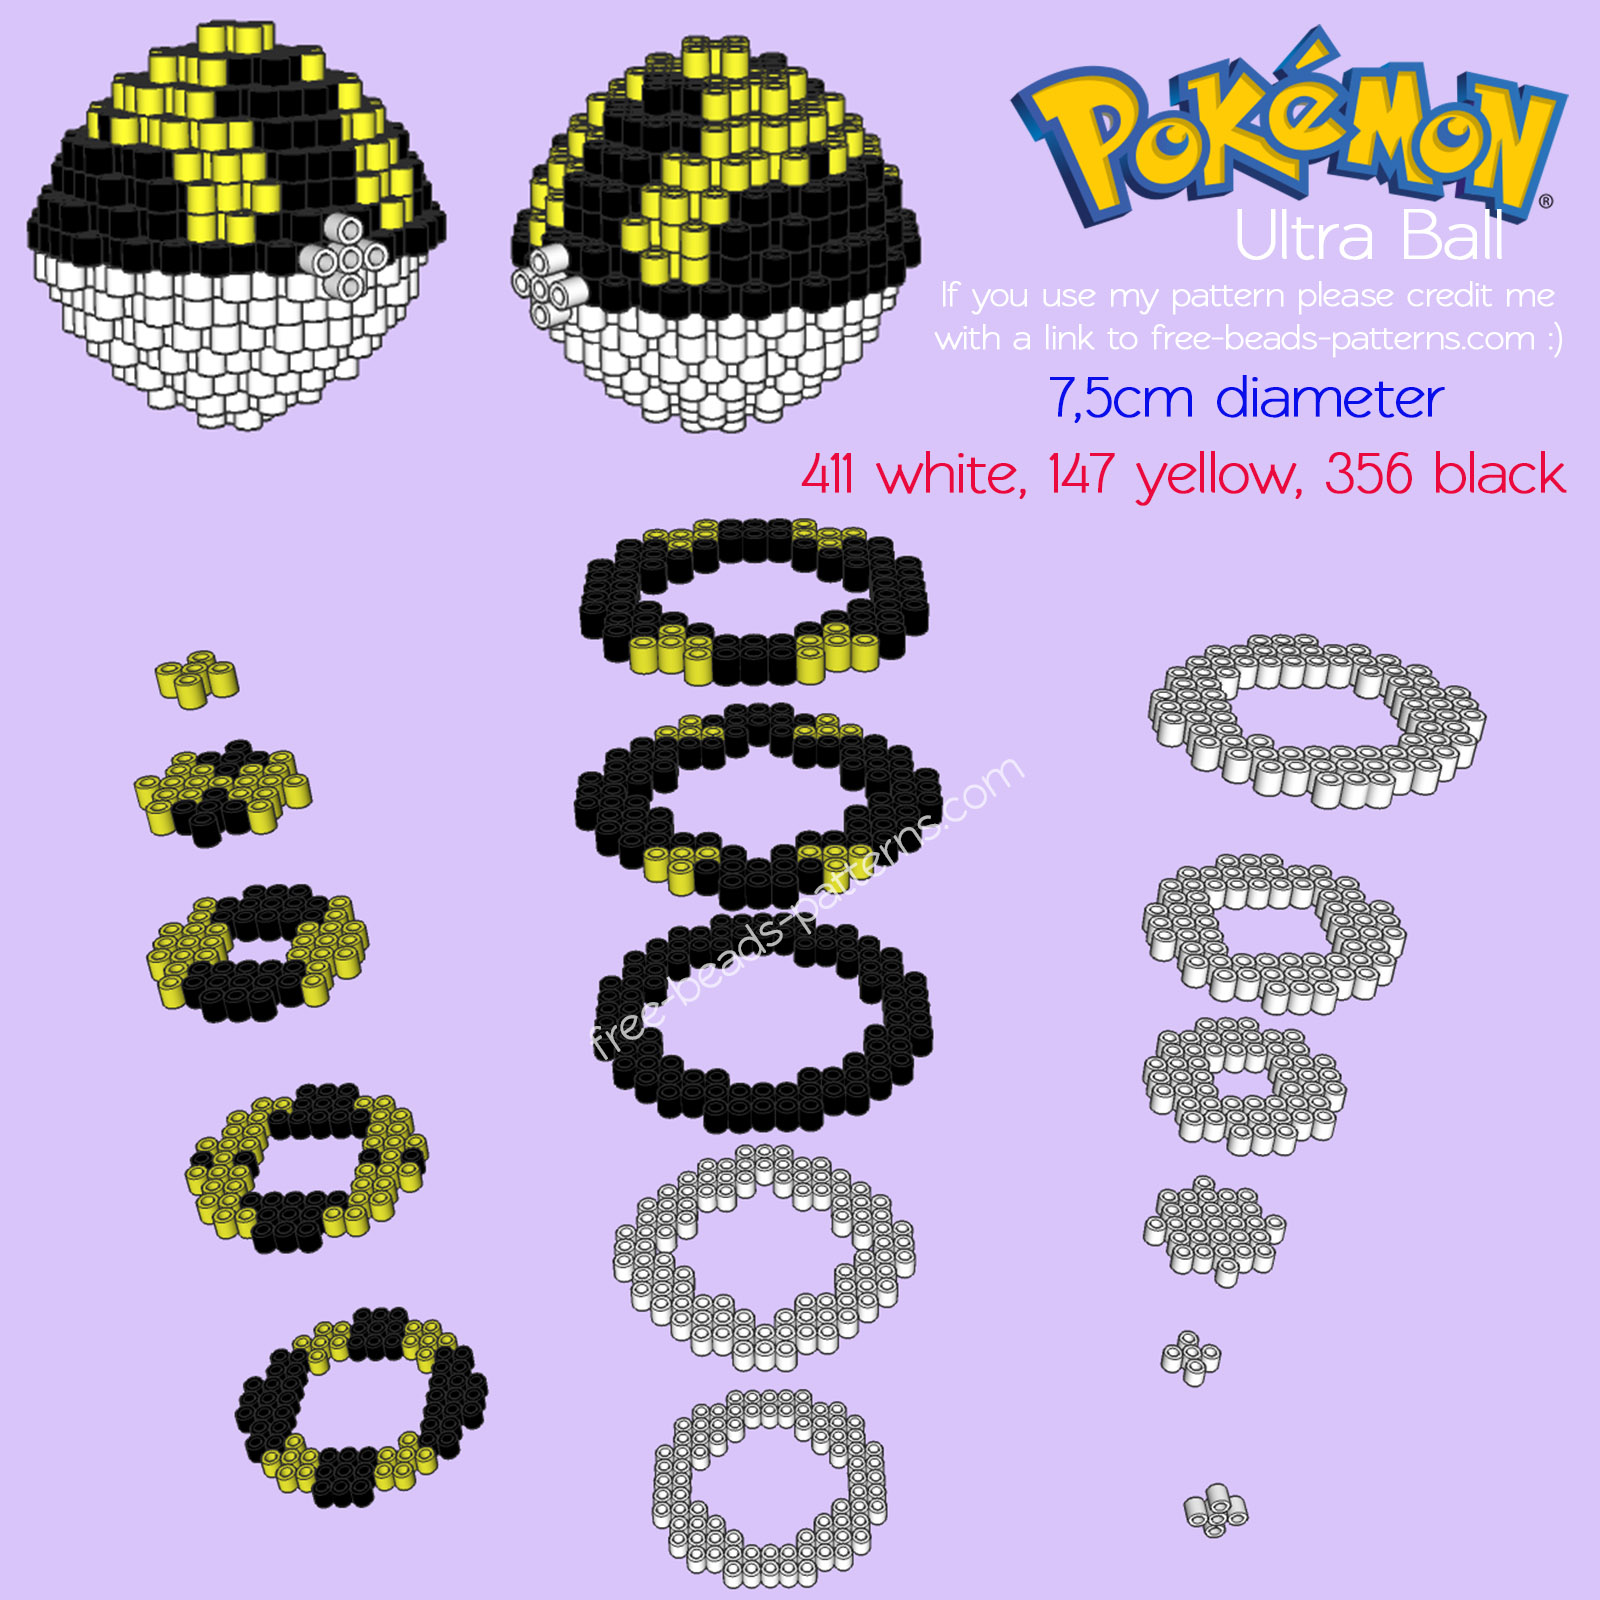 3D Ultra Ball free Pokemon perler beads iron beads pattern